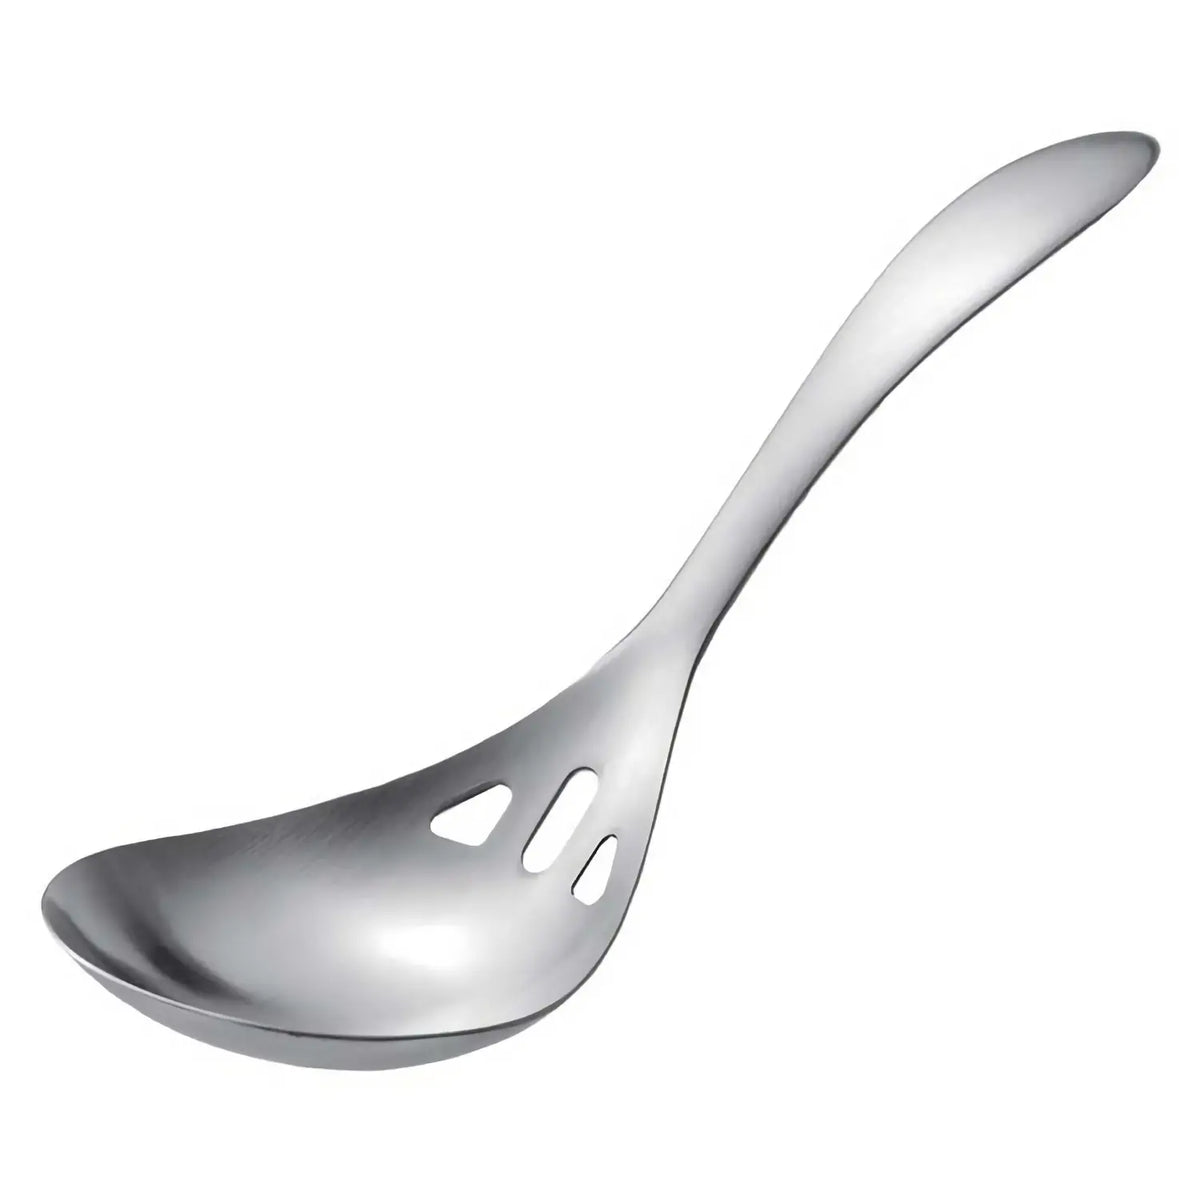 Aux Co. Ltd. Oroshi Spoon